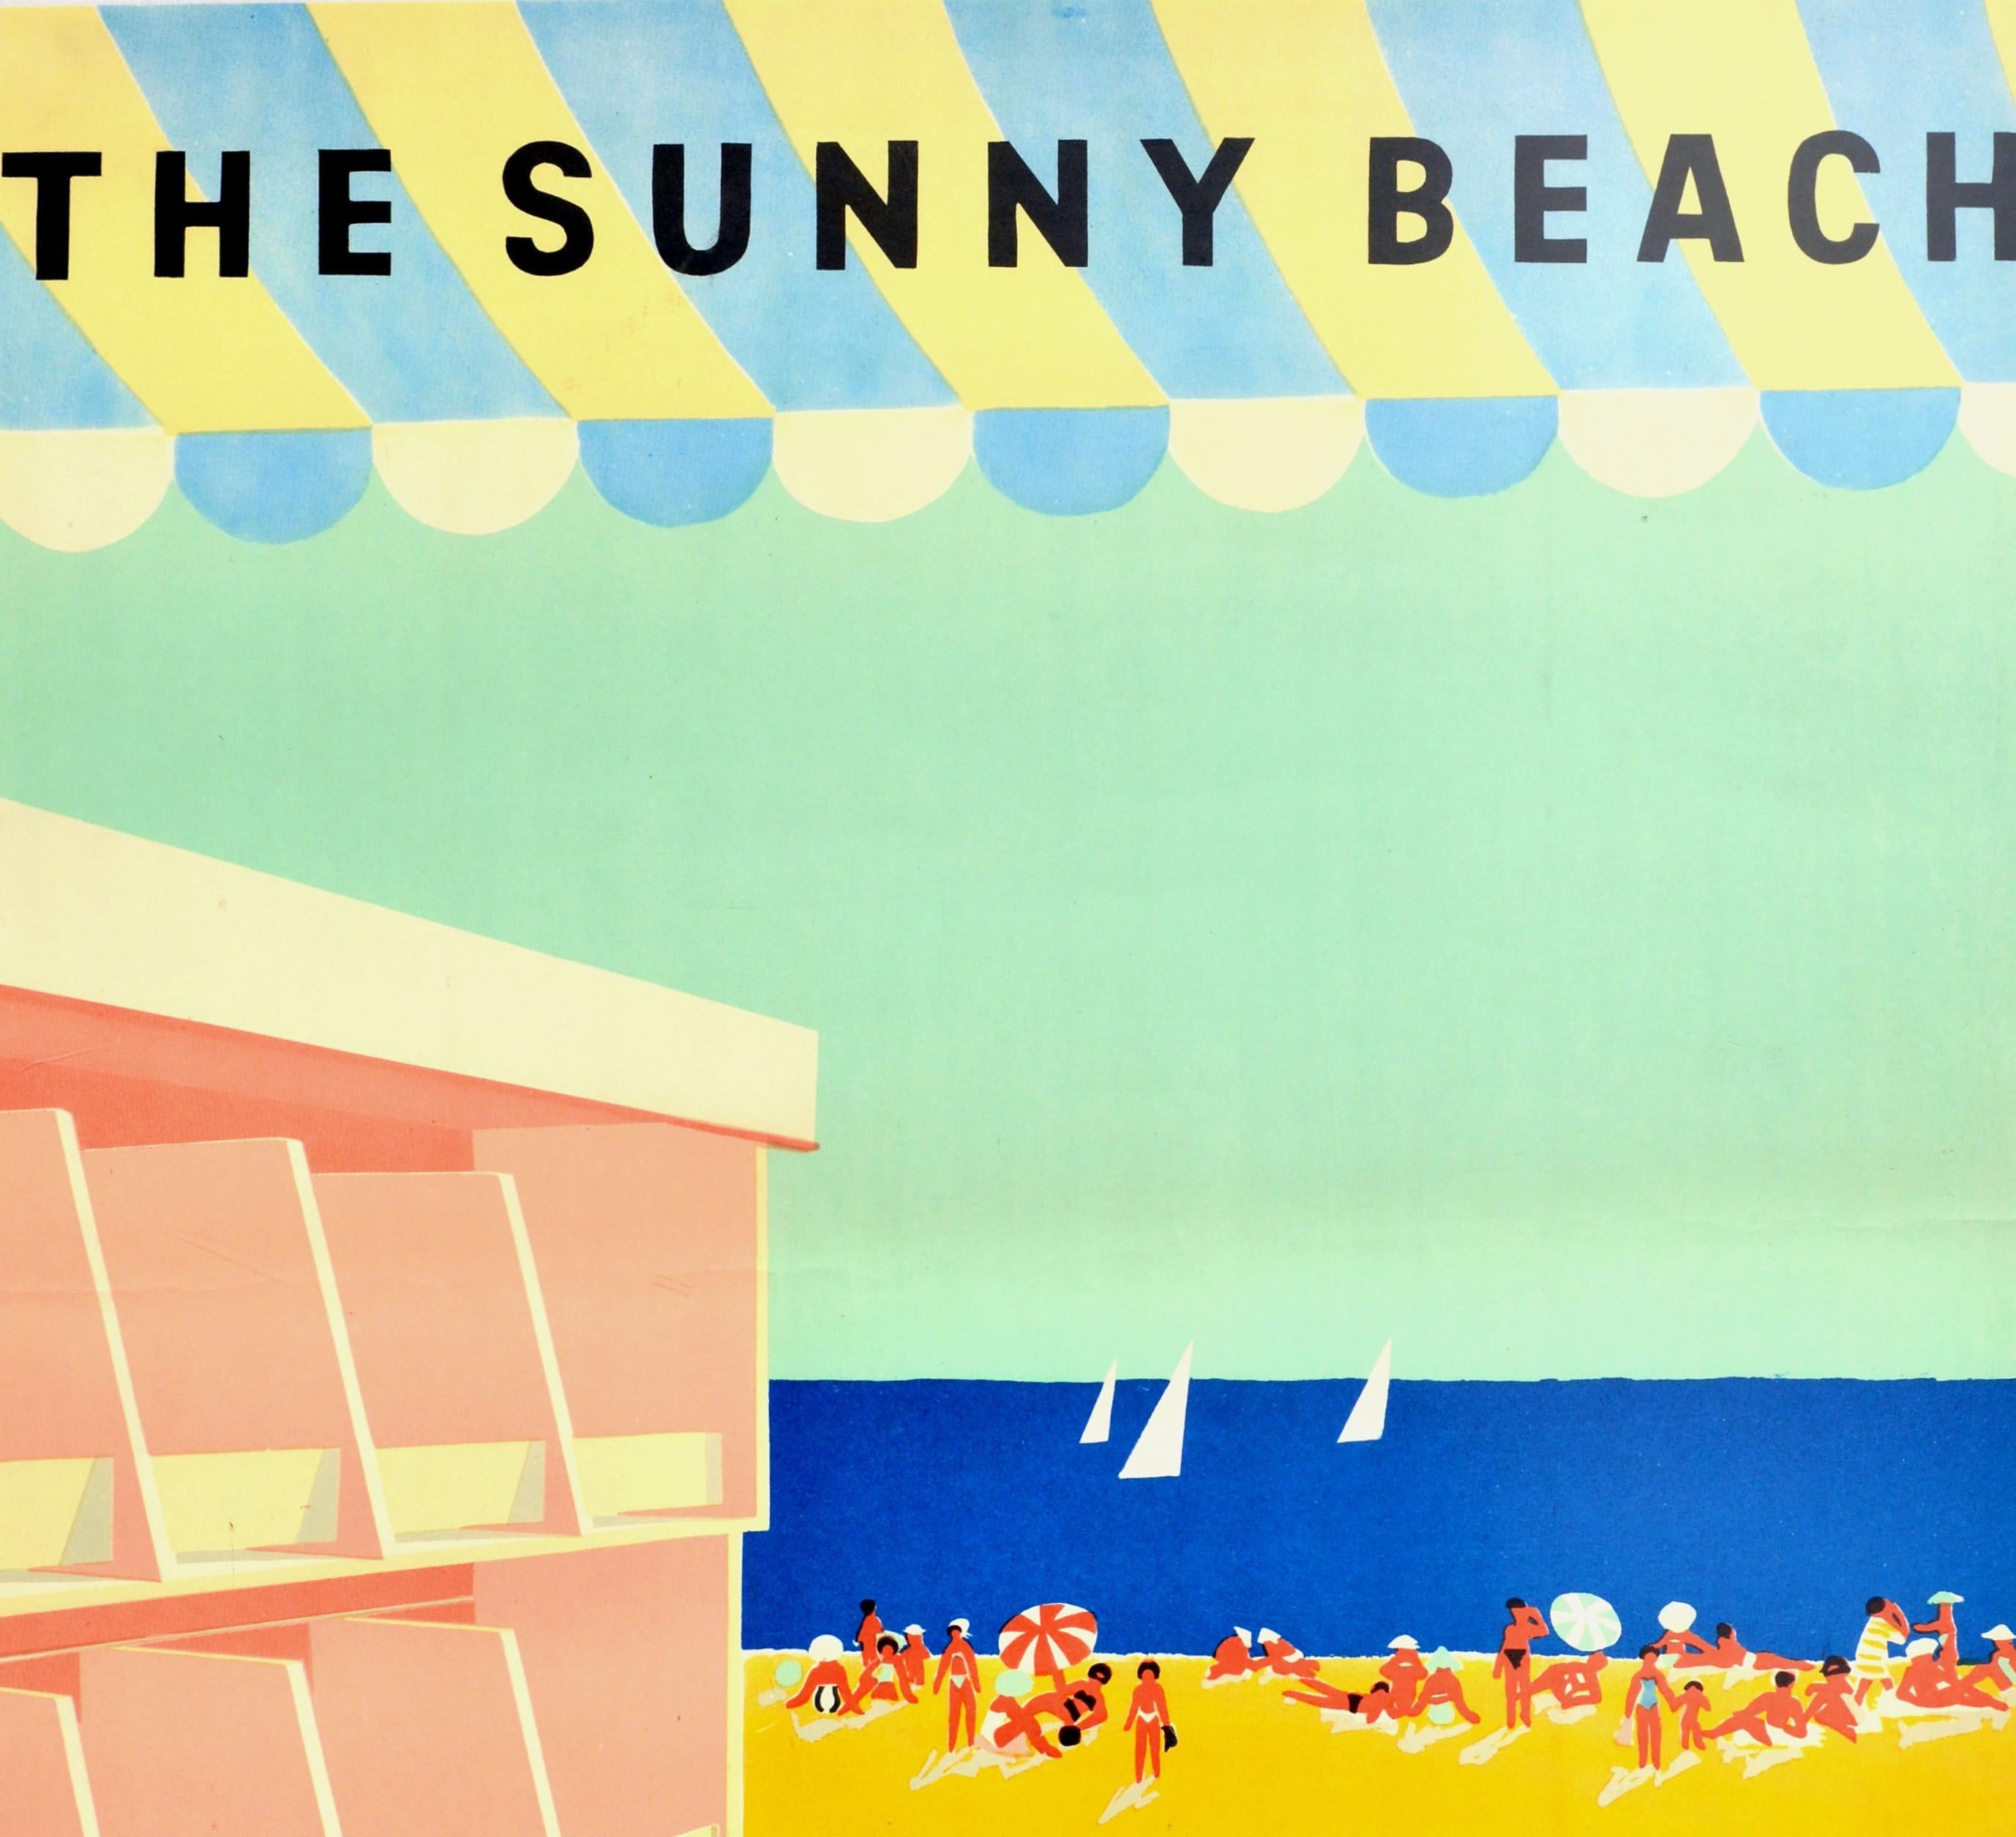 Original Vintage Poster The Sunny Beach Bulgaria Travel Sailing Black Sea Resort - Print by Unknown